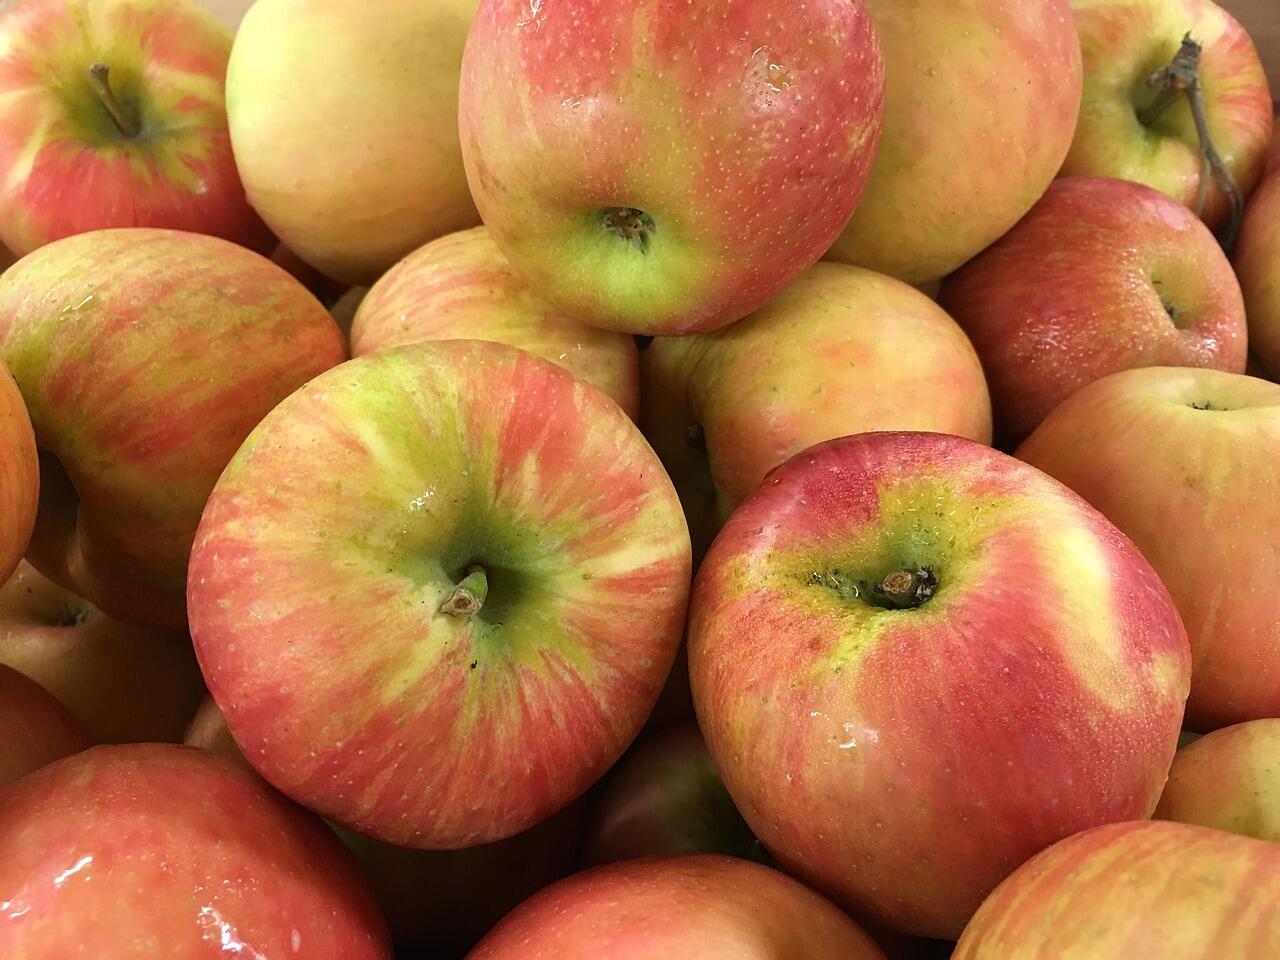 Illinois plant pathologist reports good news for pumpkins, apples